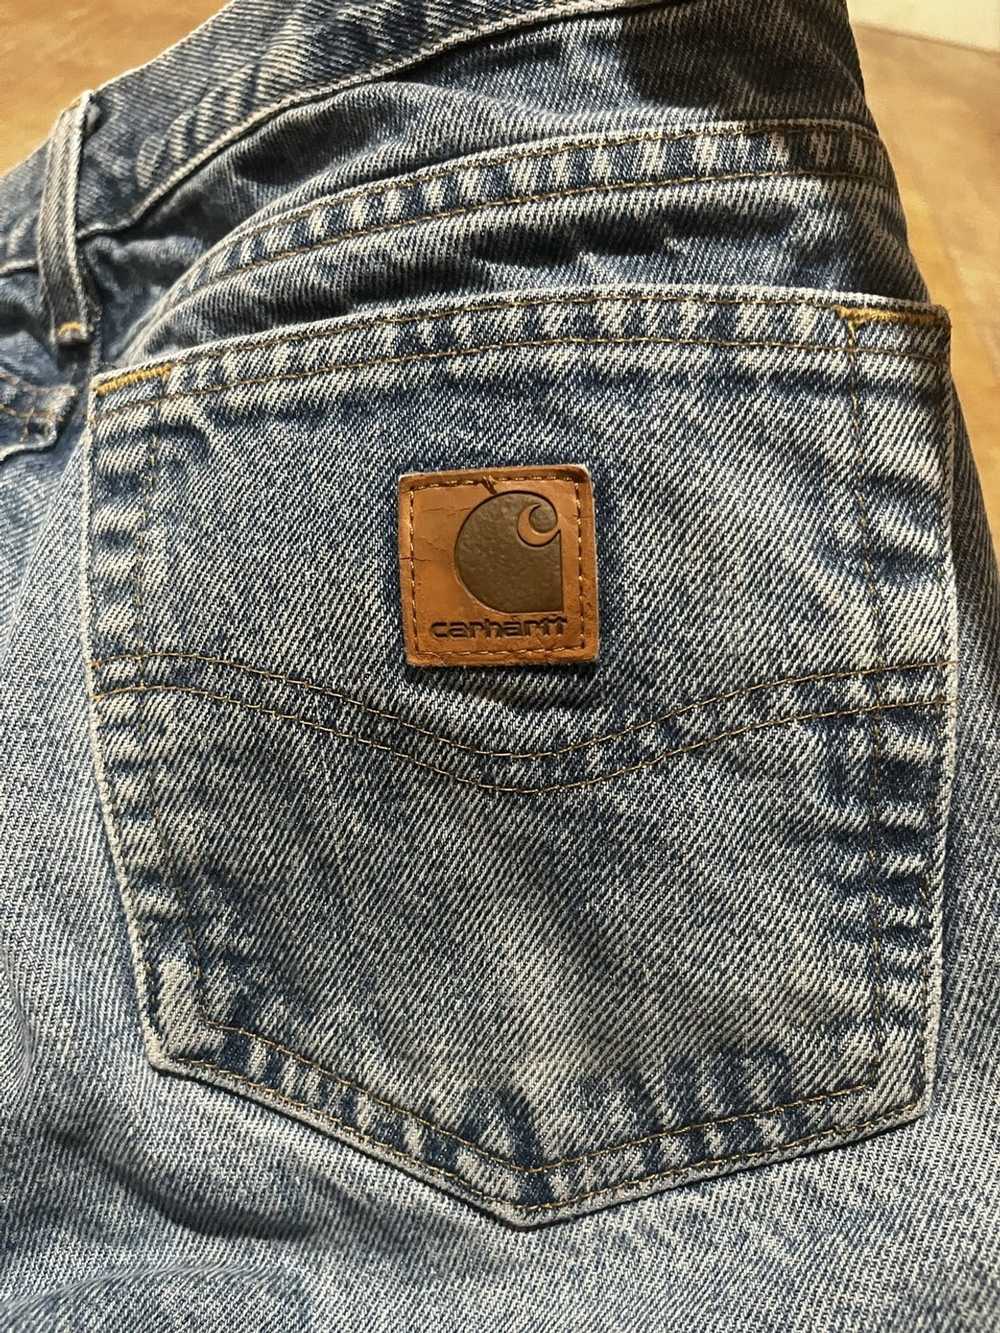 Carhartt × Vintage Carhartt jeans - image 3